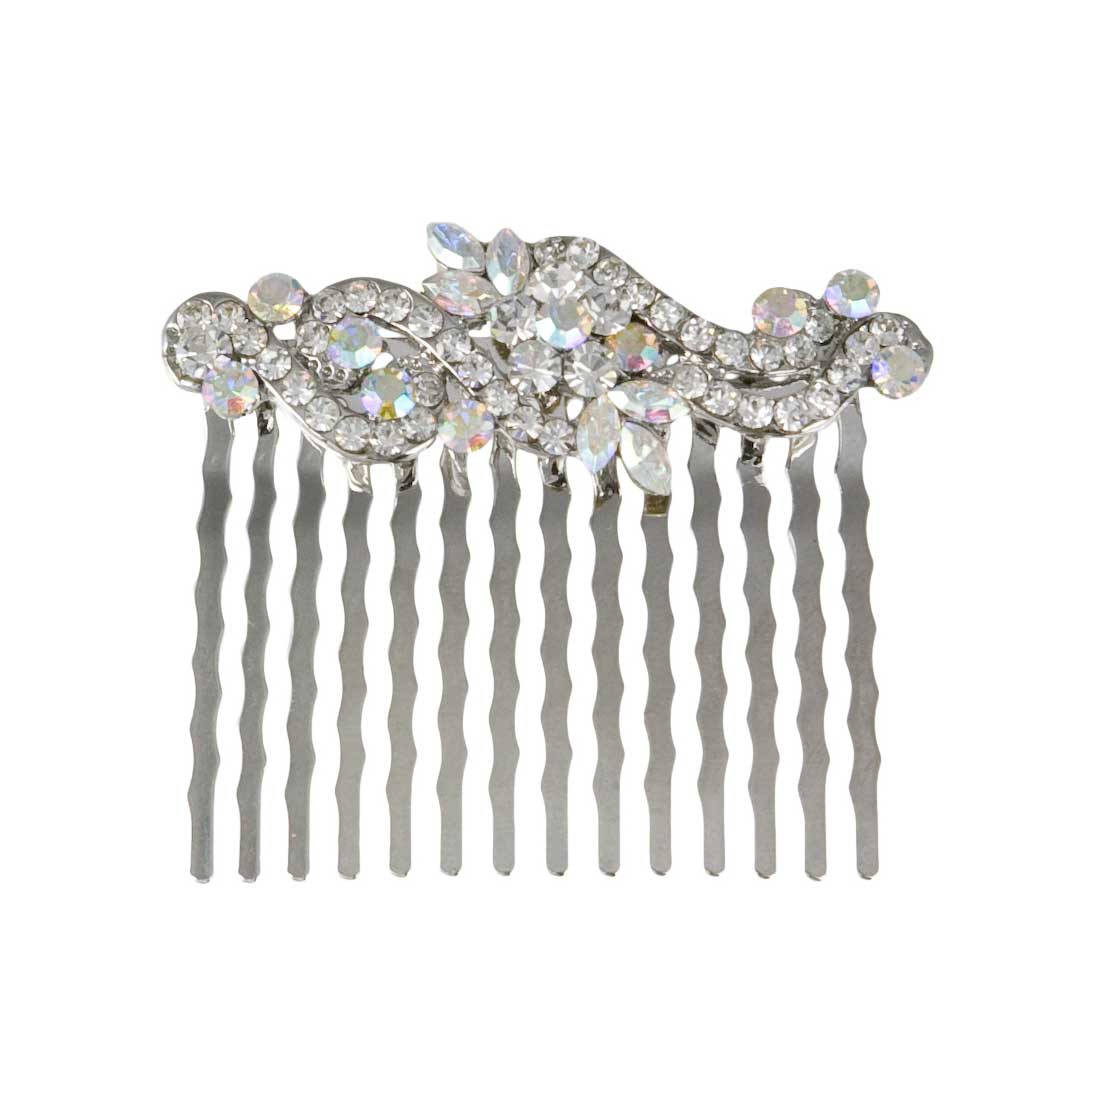 Delicate Beauty Aurora Borealis Crystal Small Hair Comb for Weddings & Bridesmaids